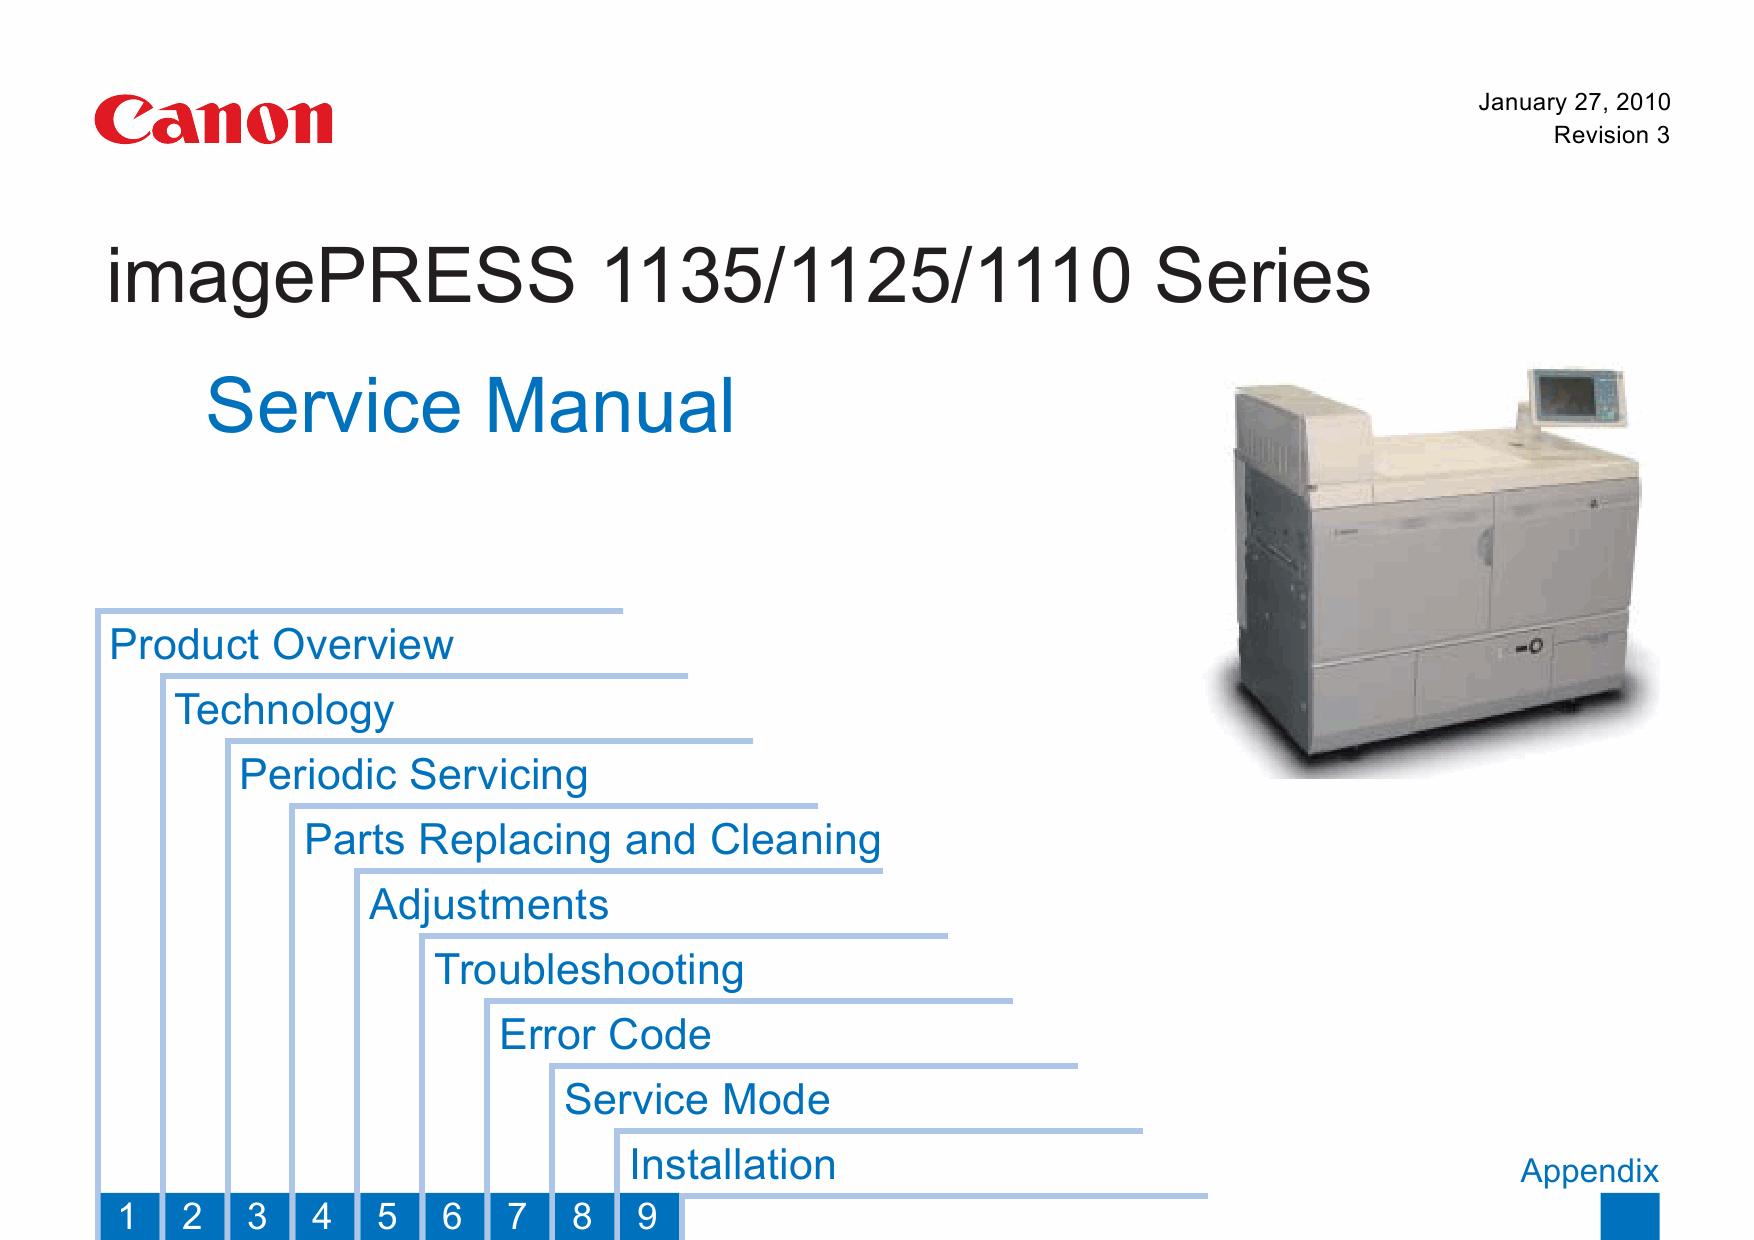 CANON imagePRESS 1110 1125 1135 Service Manual PDF download-1